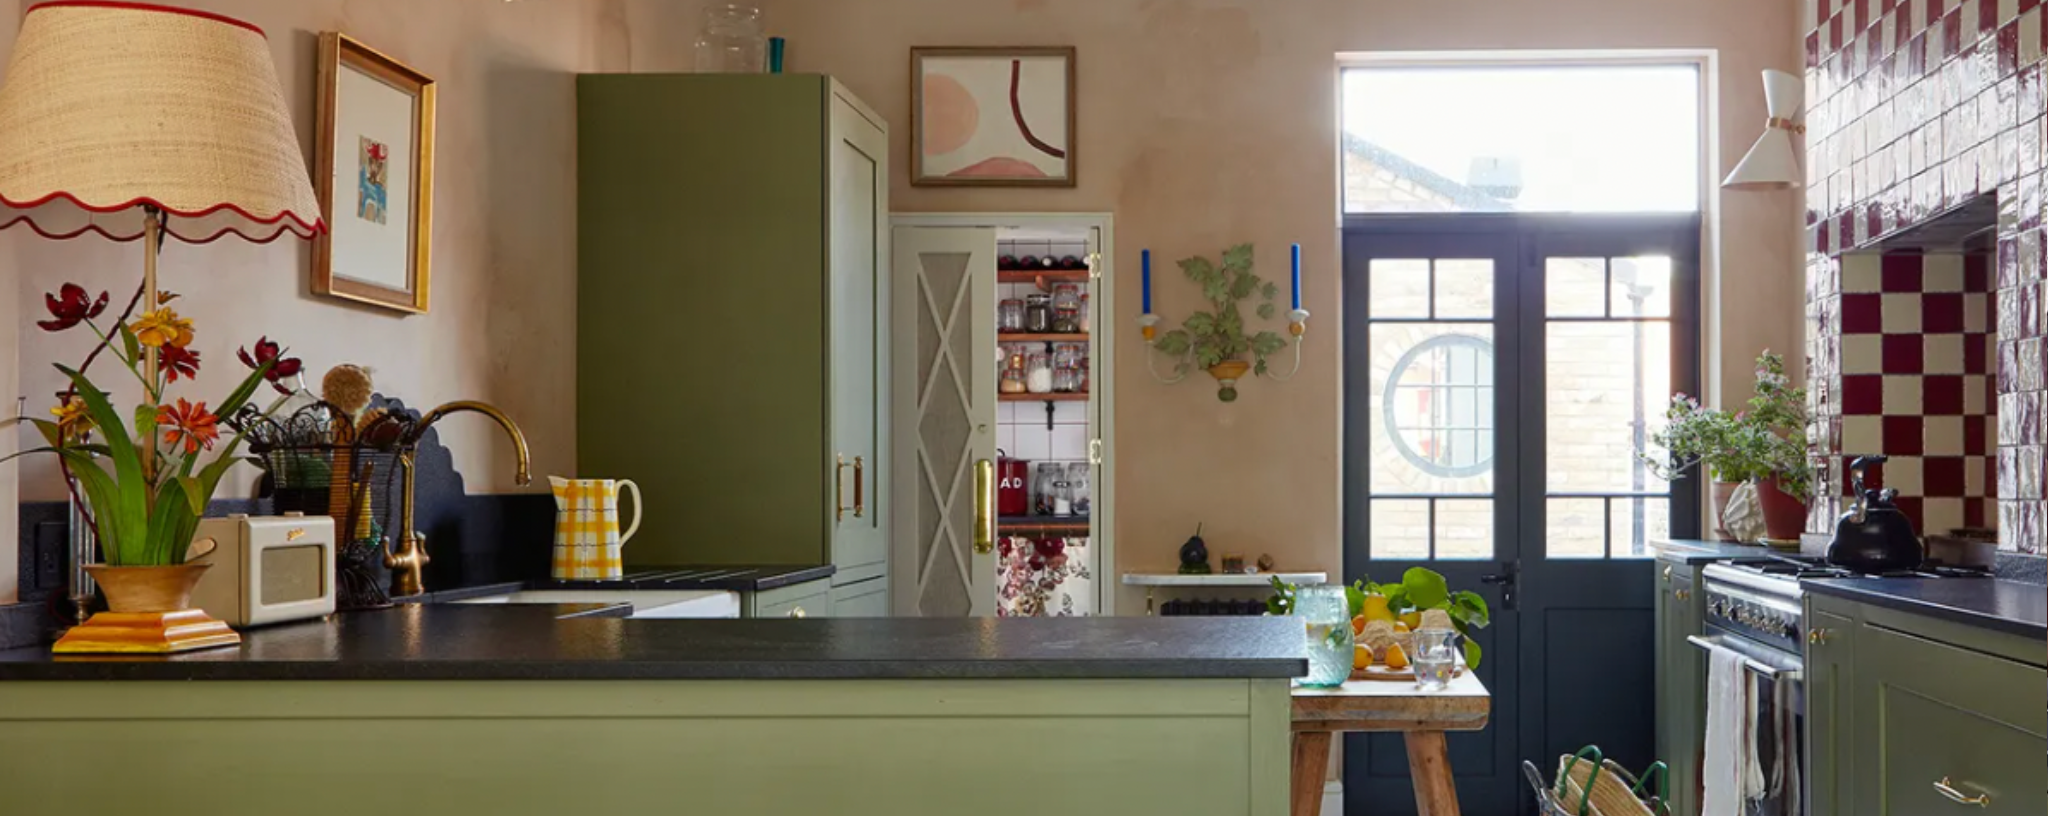 AOAR: Matilda Gould’s Green and Pink Kitchen